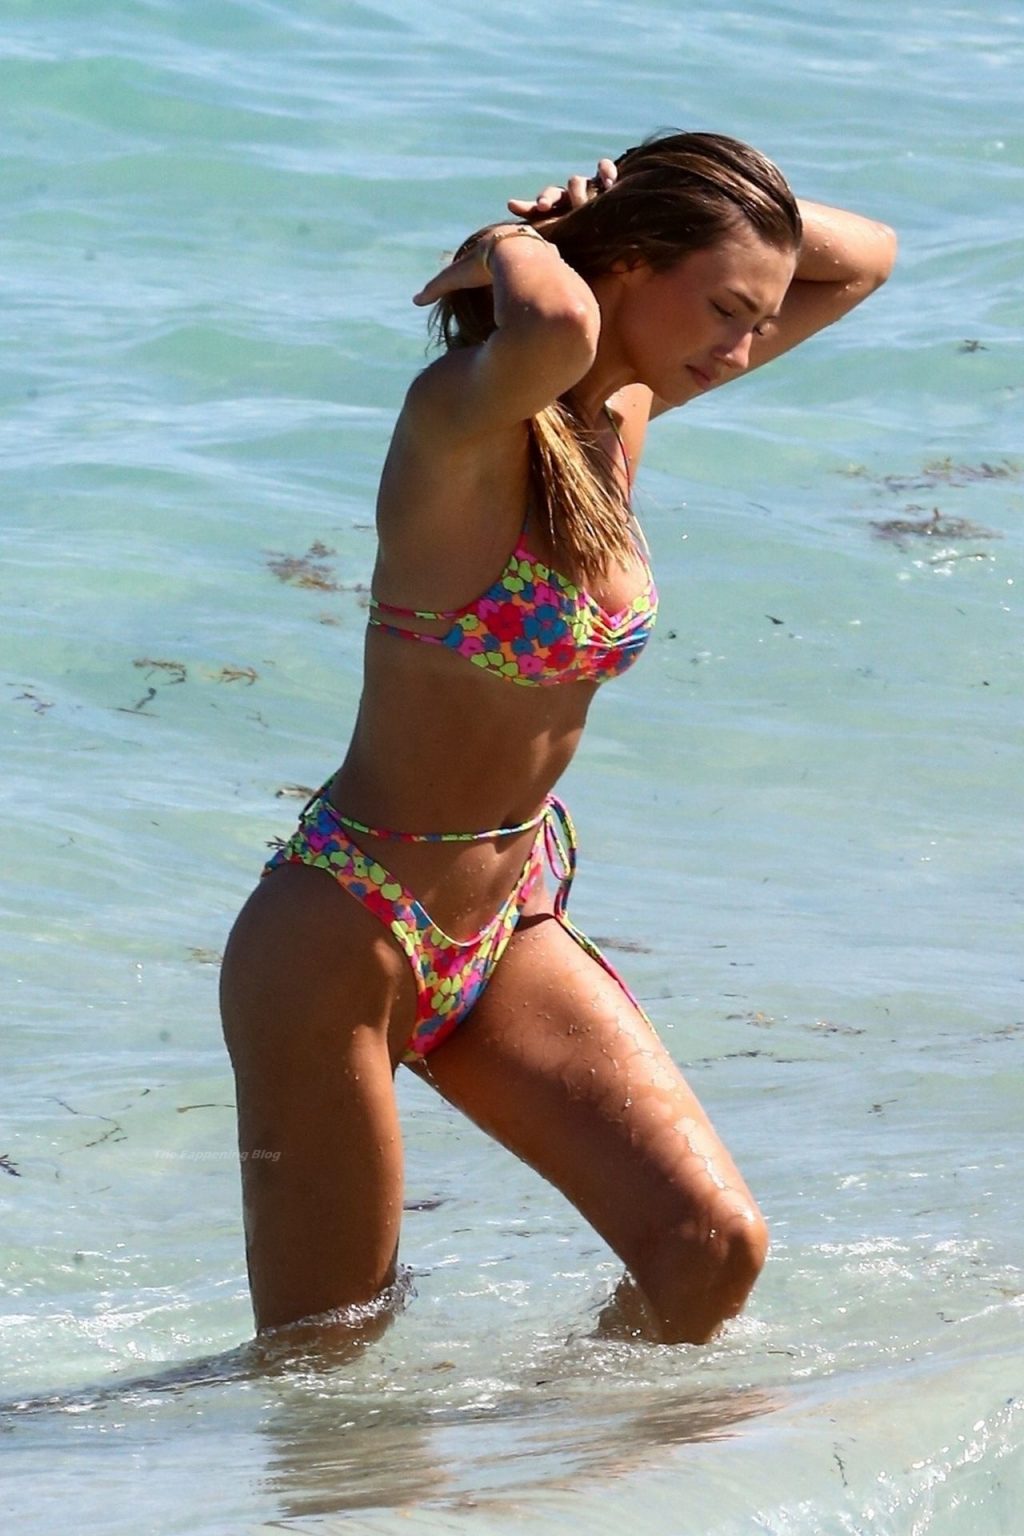 Lorena Rae Wears a Colorful Floral Bikini on the Beach in Miami (38 Photos)